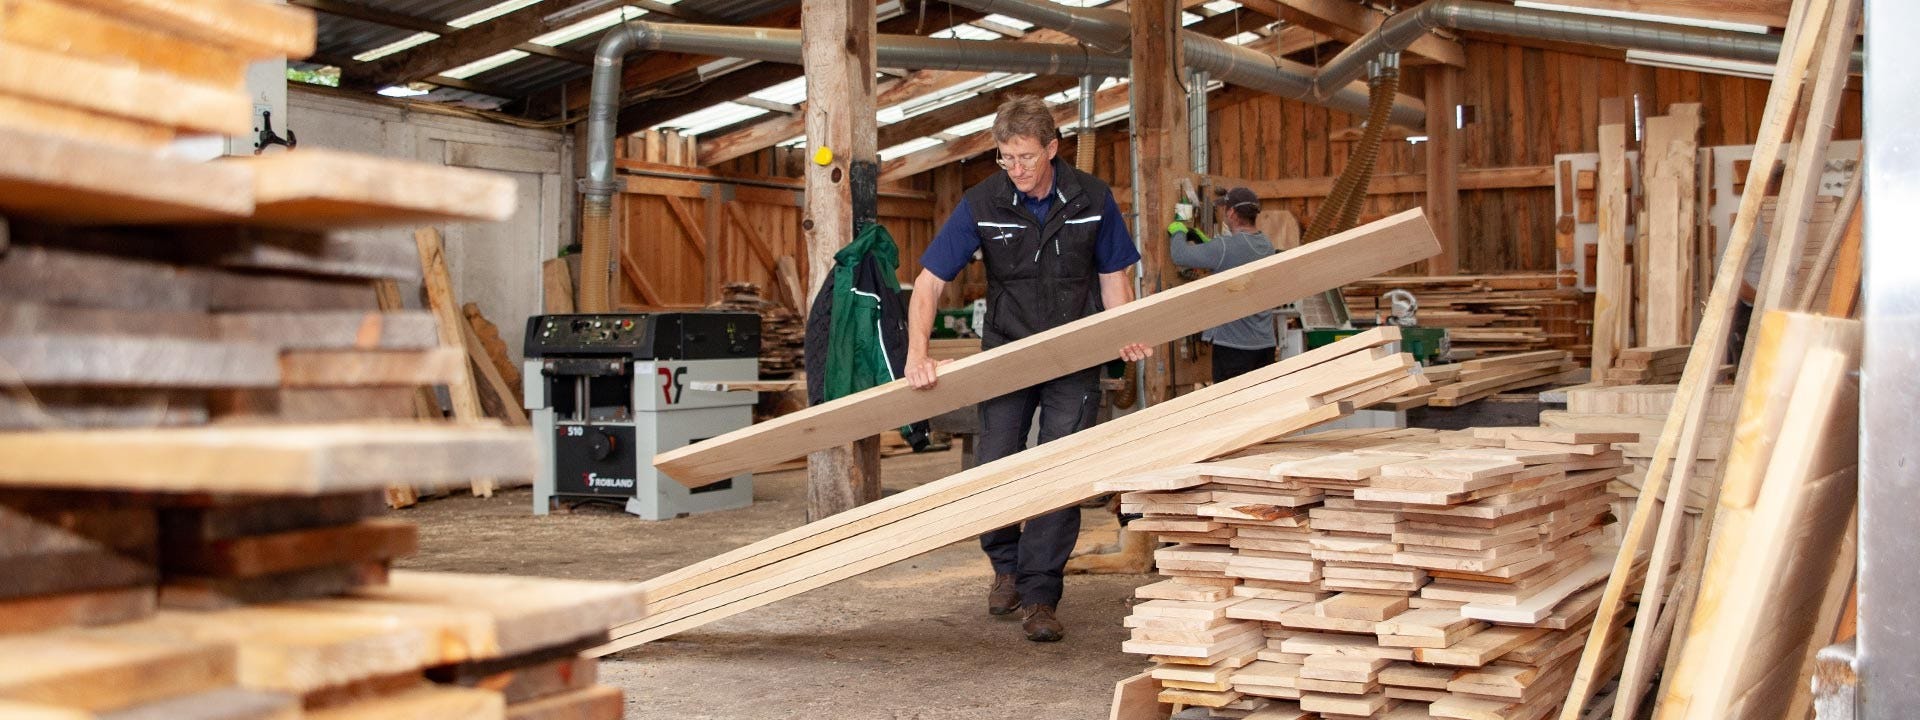 Scottish Wood – a Sawmill Successfully Utilizing Local Scottish Timber